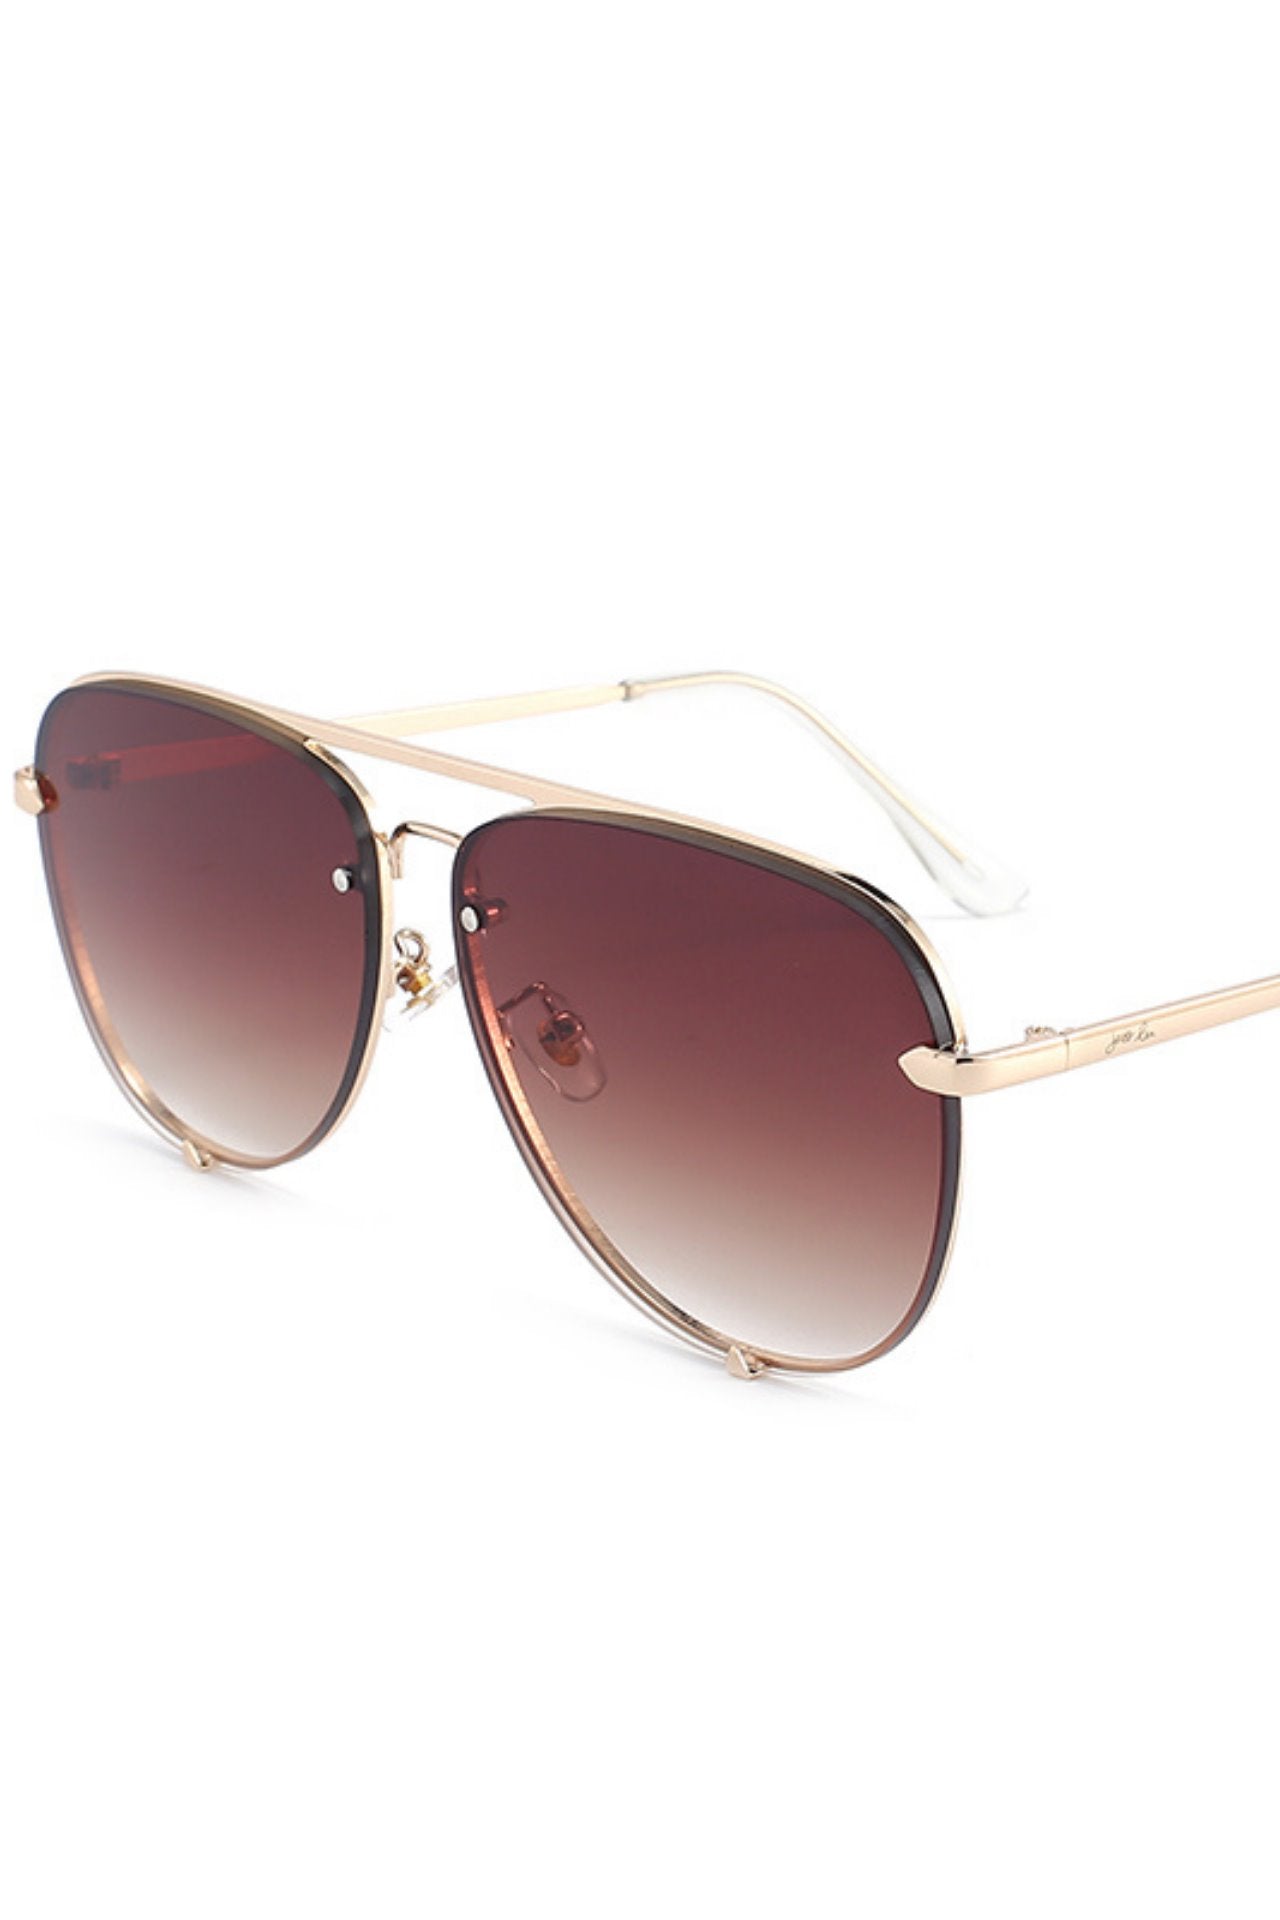 Hotel California Aviator Sunglasses - Jess Lea Wholesale